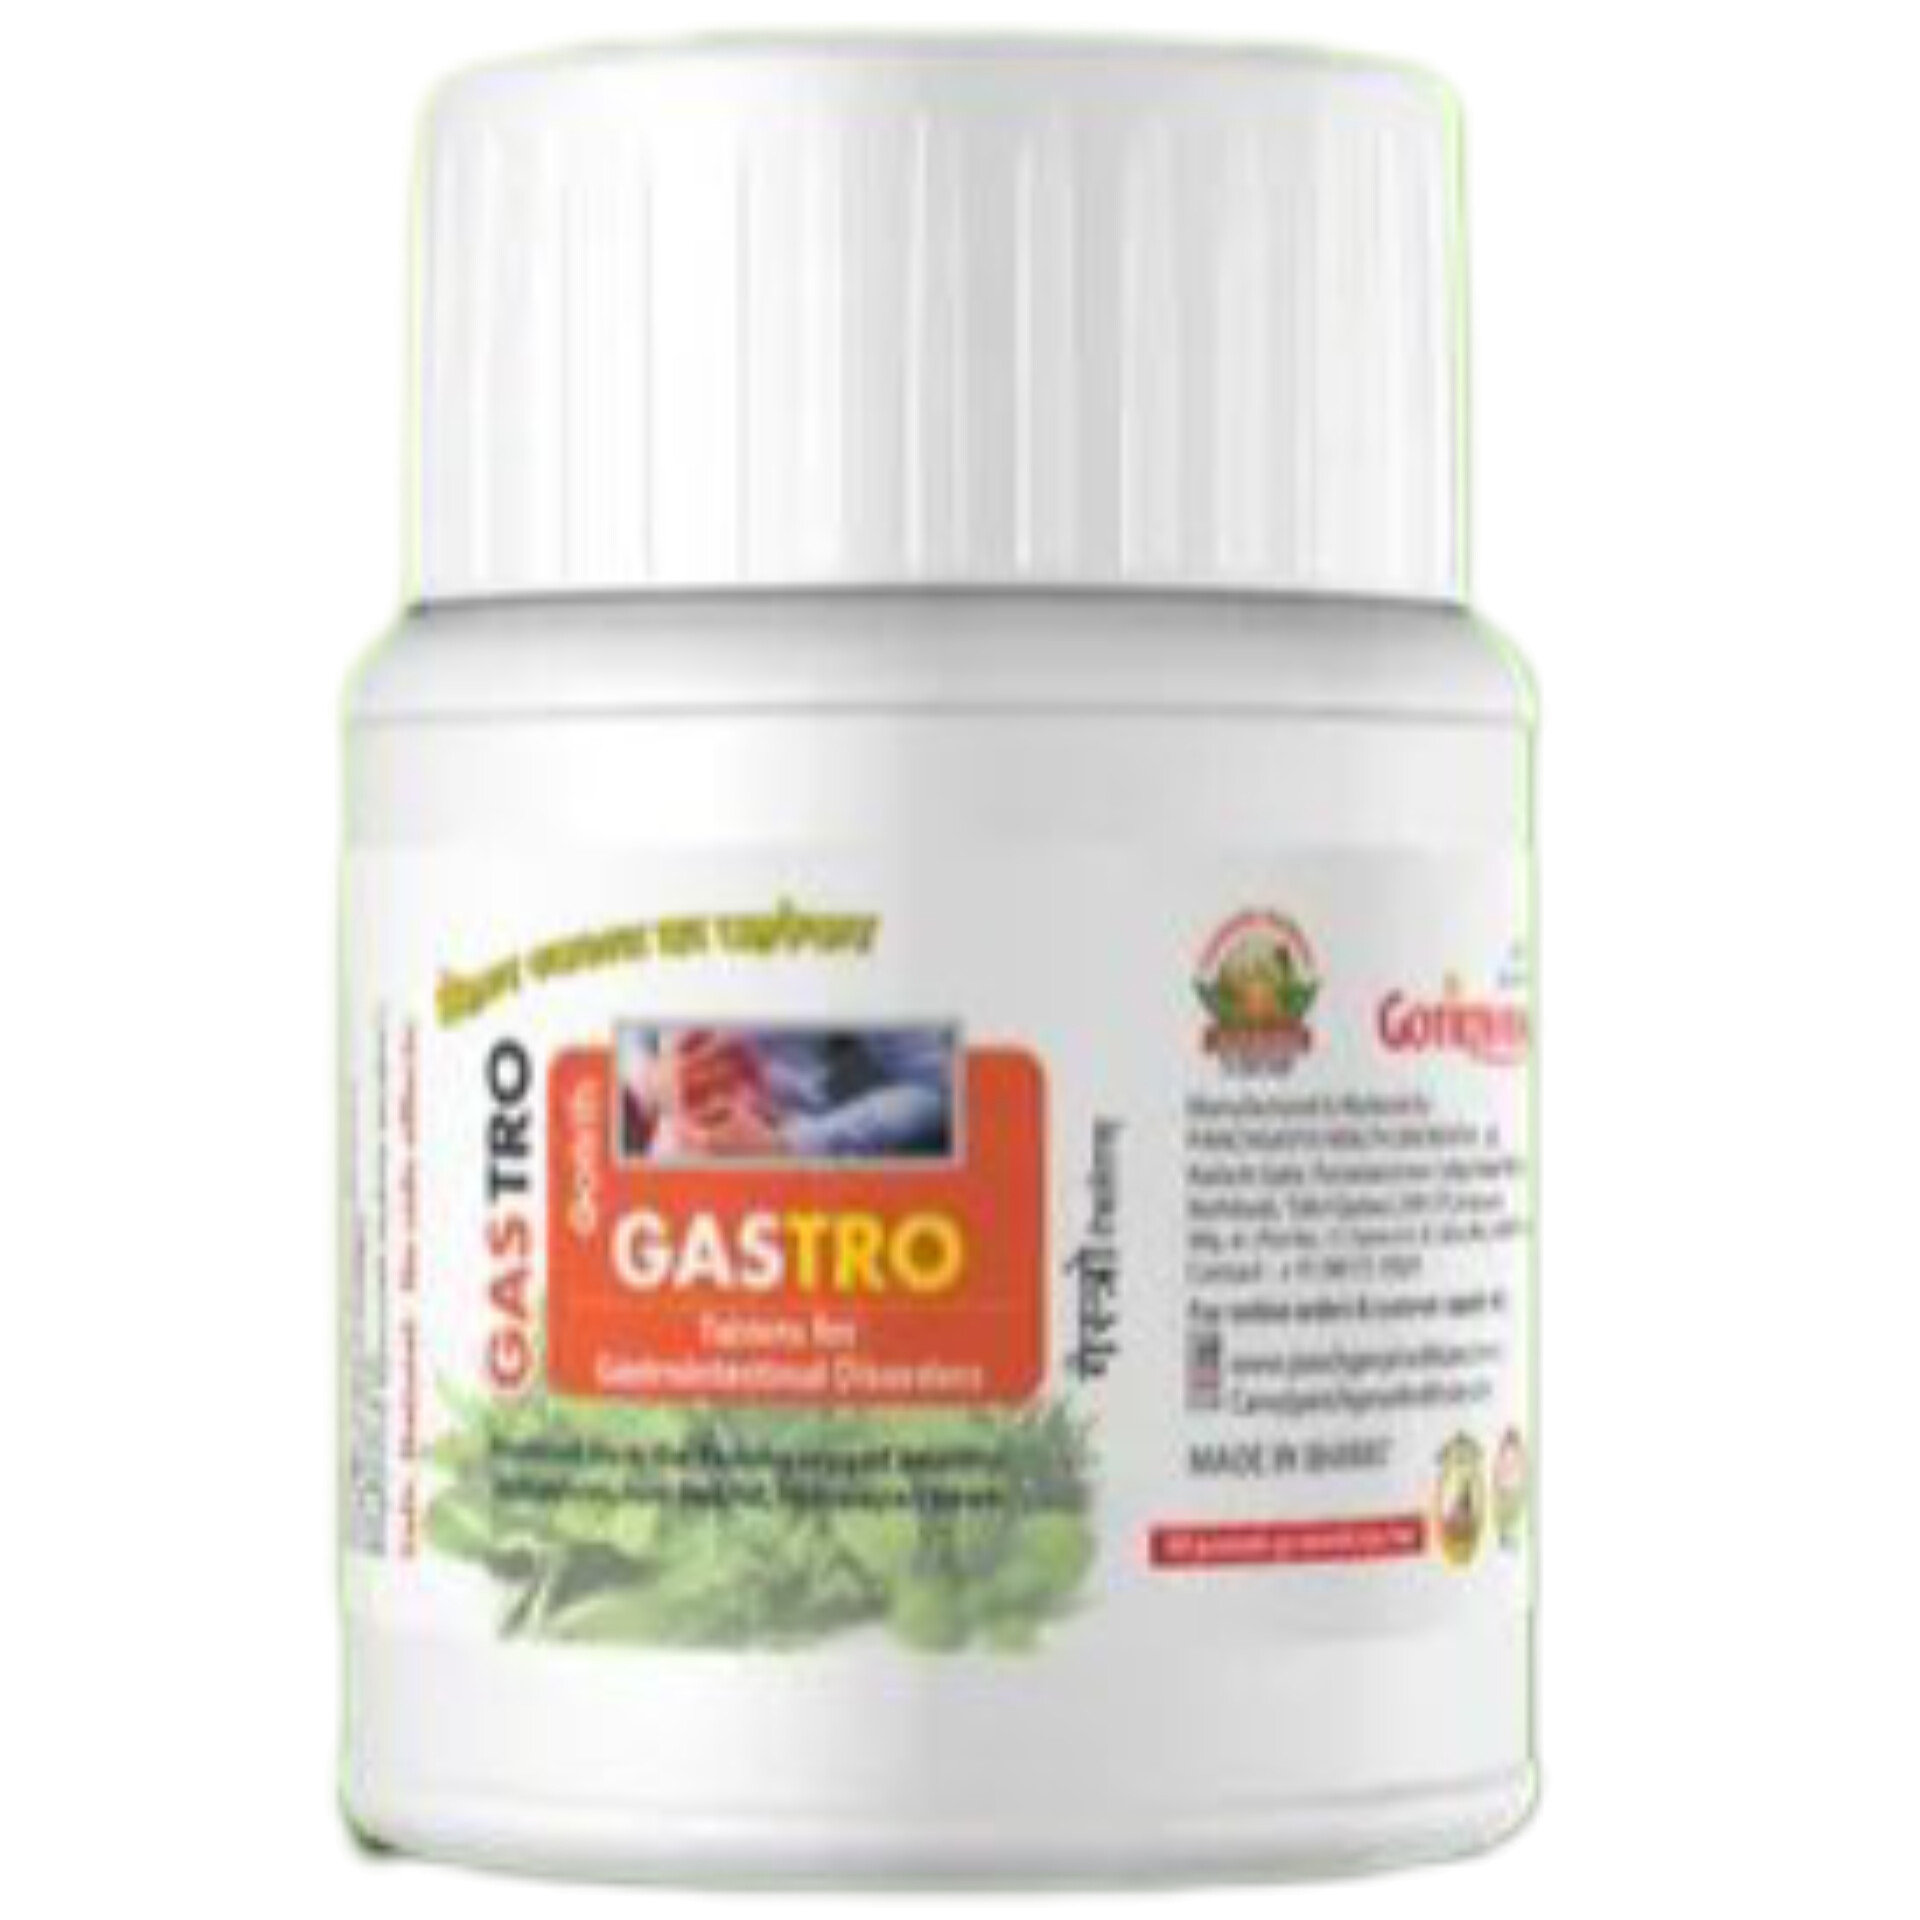 GOTIRTH GASTRO गैस्ट्रो (उदर रोग हर)  - Liquid 400ml+Tablet 40pc